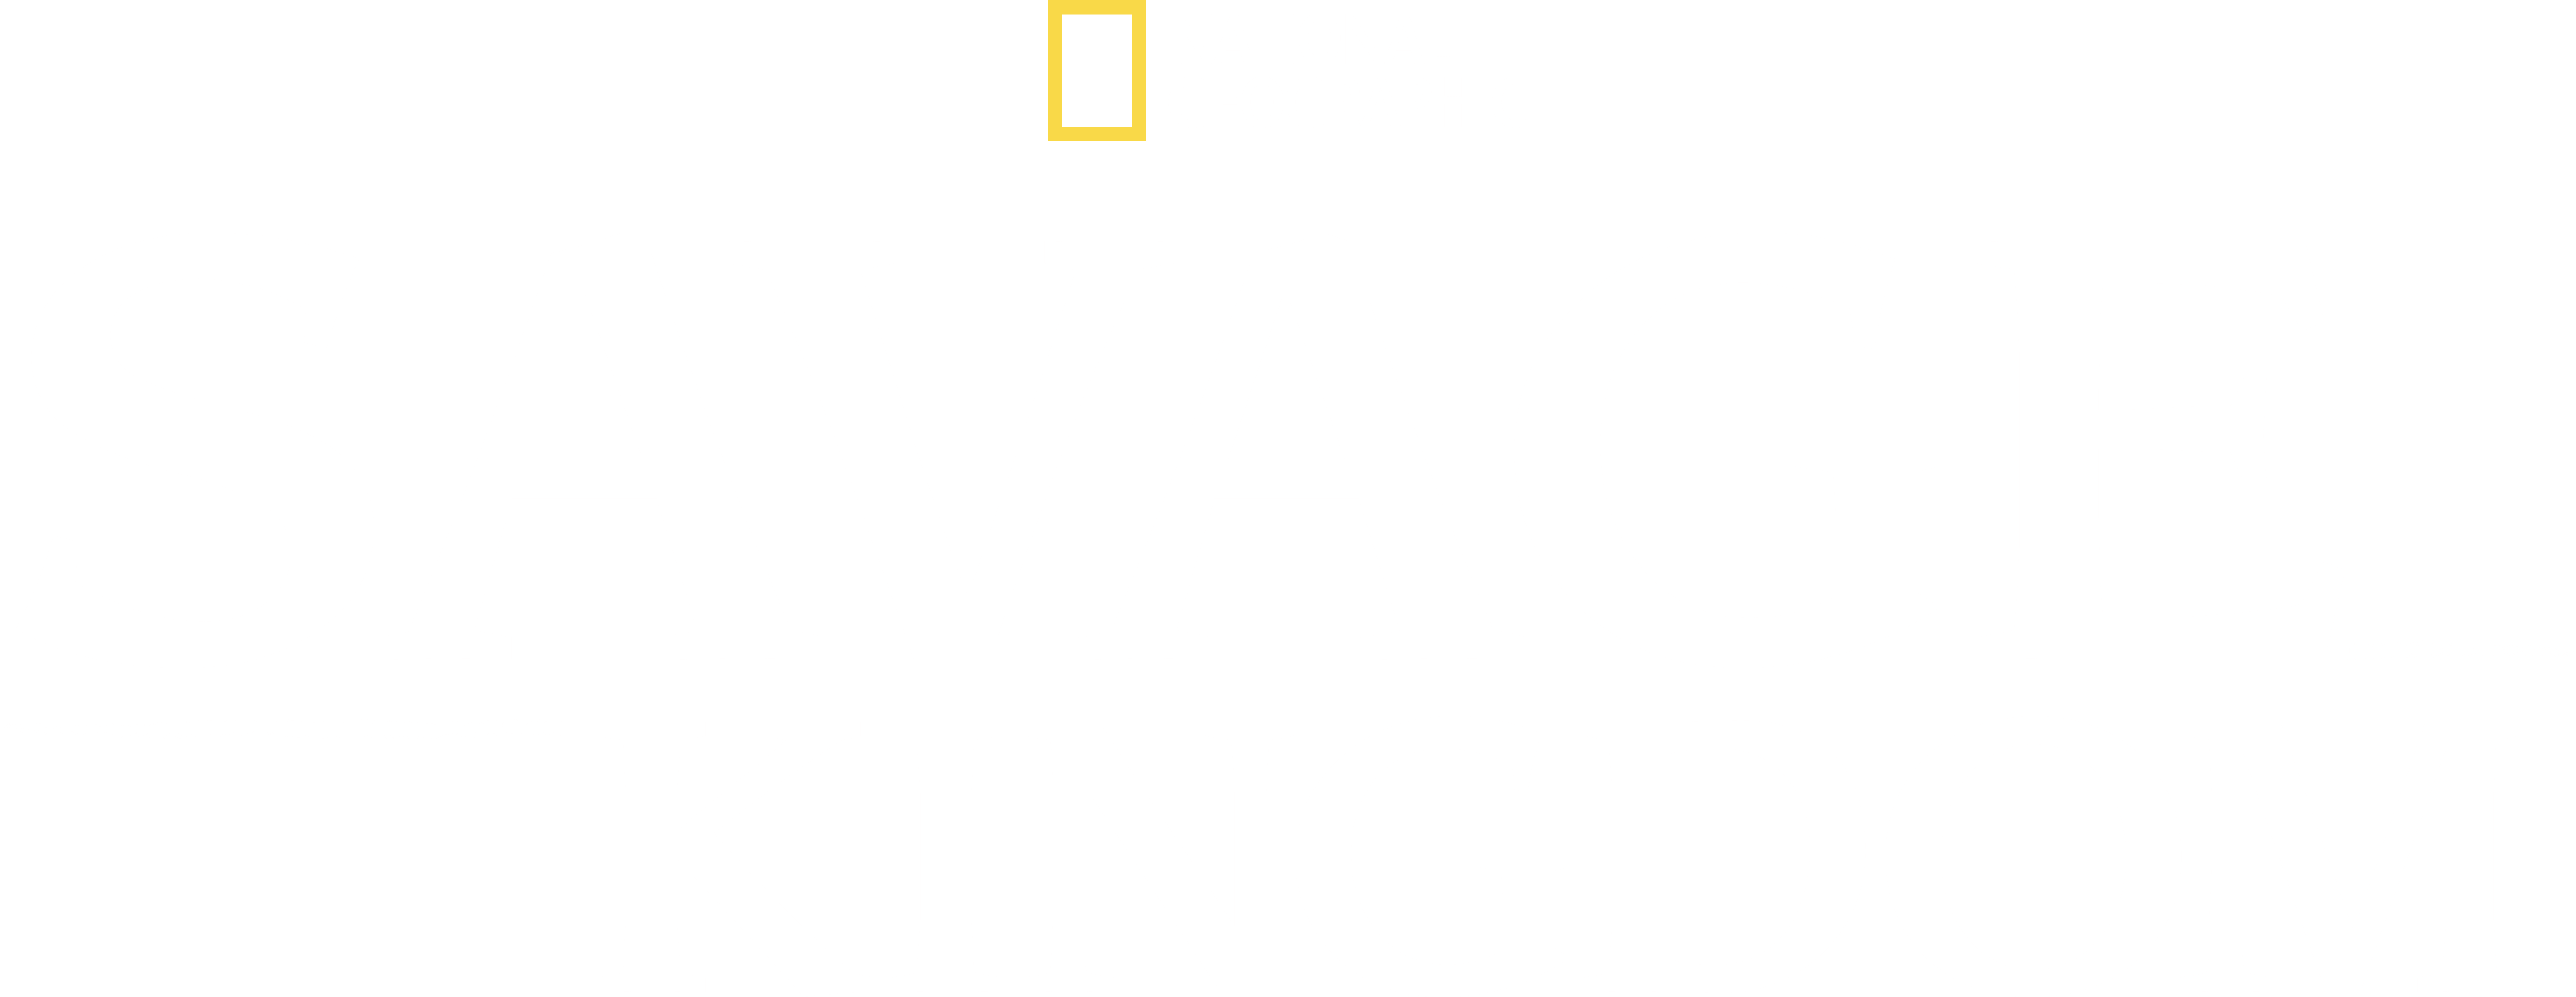 Savage Kingdom logo